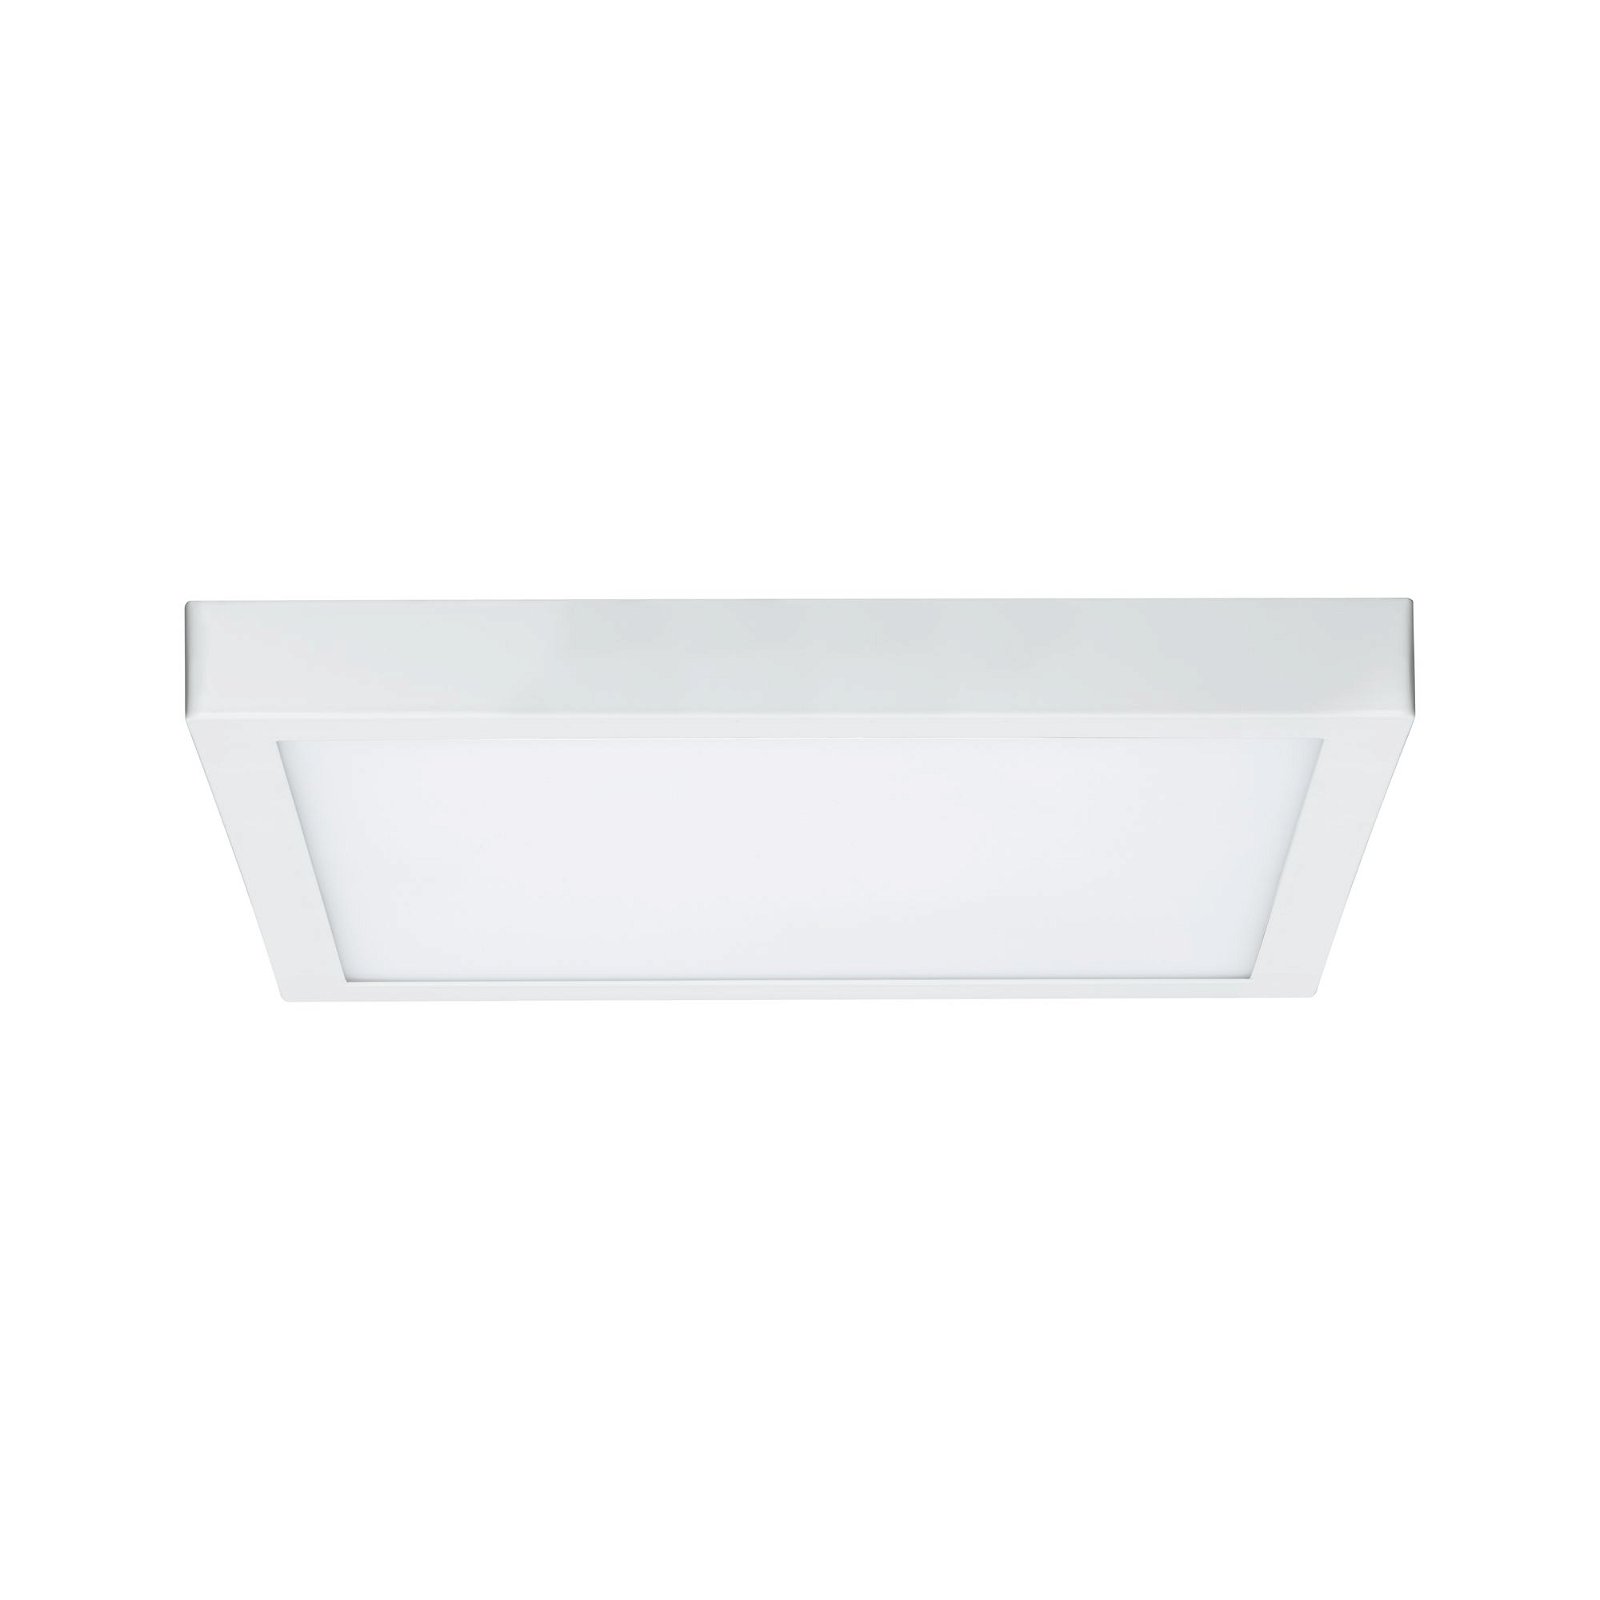 LED Panel Smart Home Zigbee Cesena square 400x400mm RGB Matt white dimmable